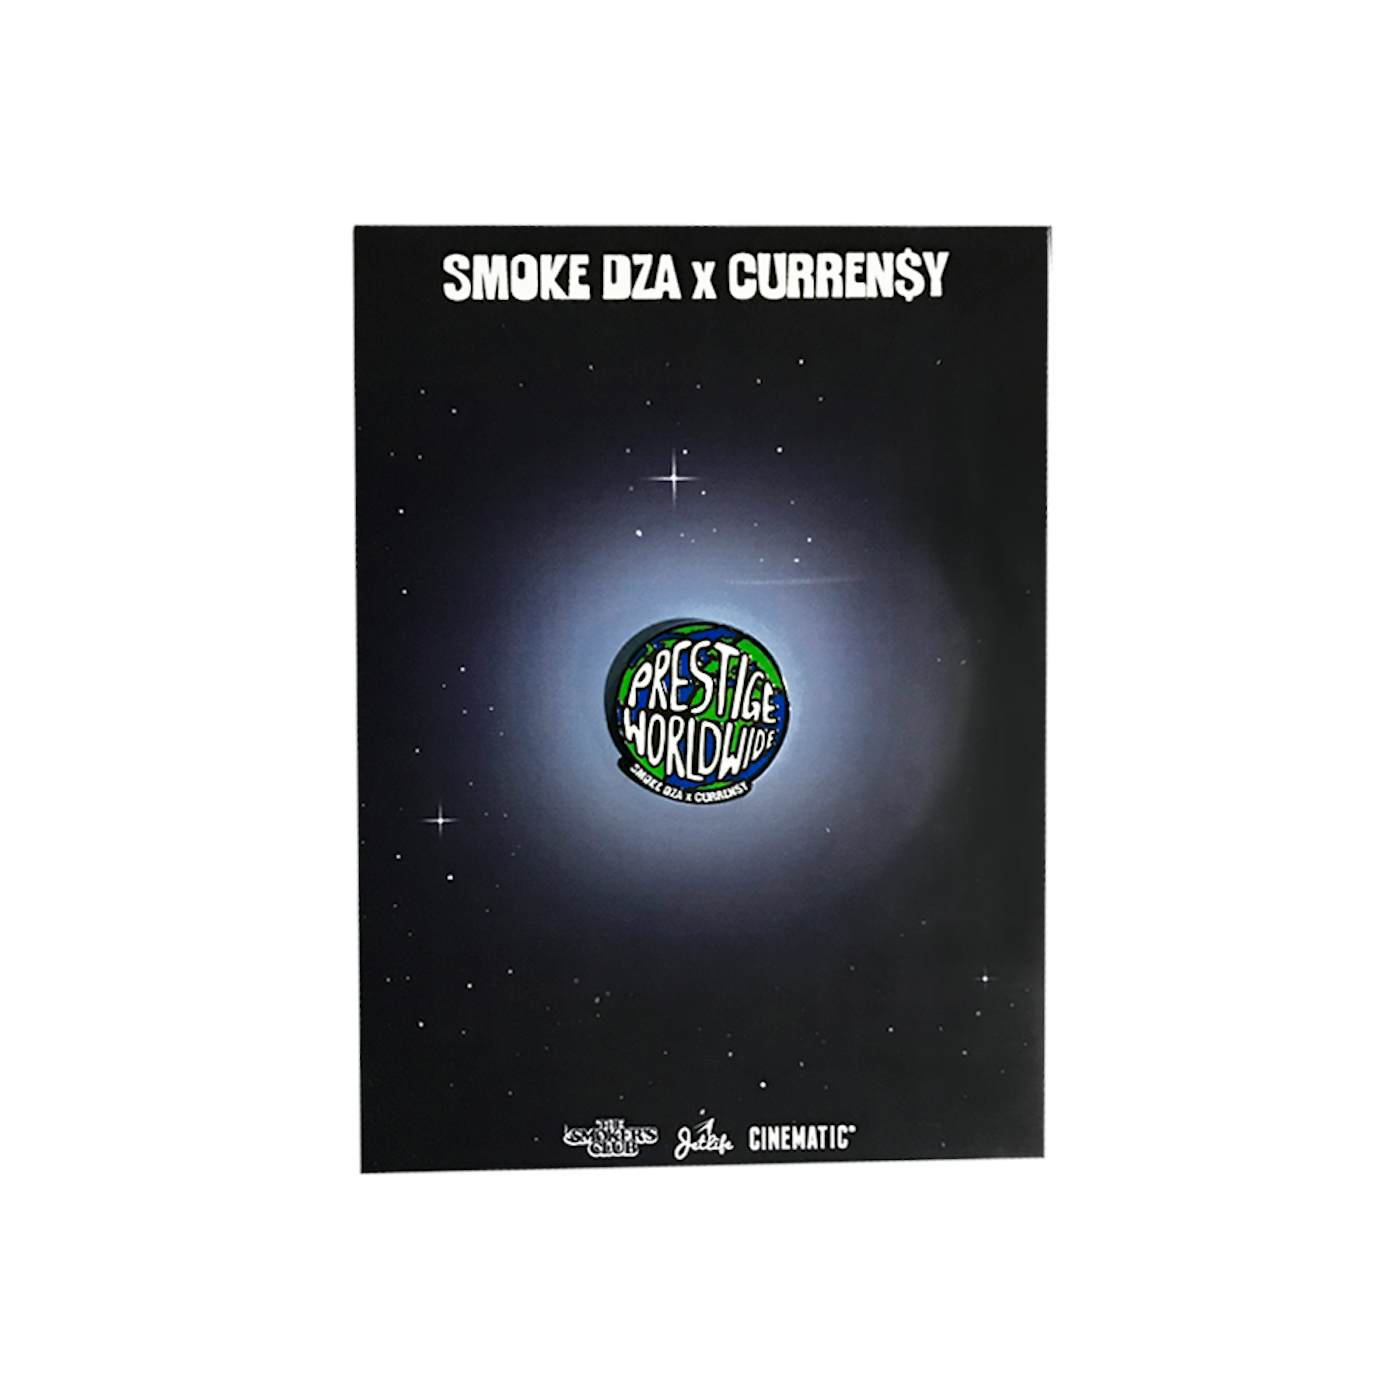 Smoke DZA Prestige Worldwide Enamel Pin